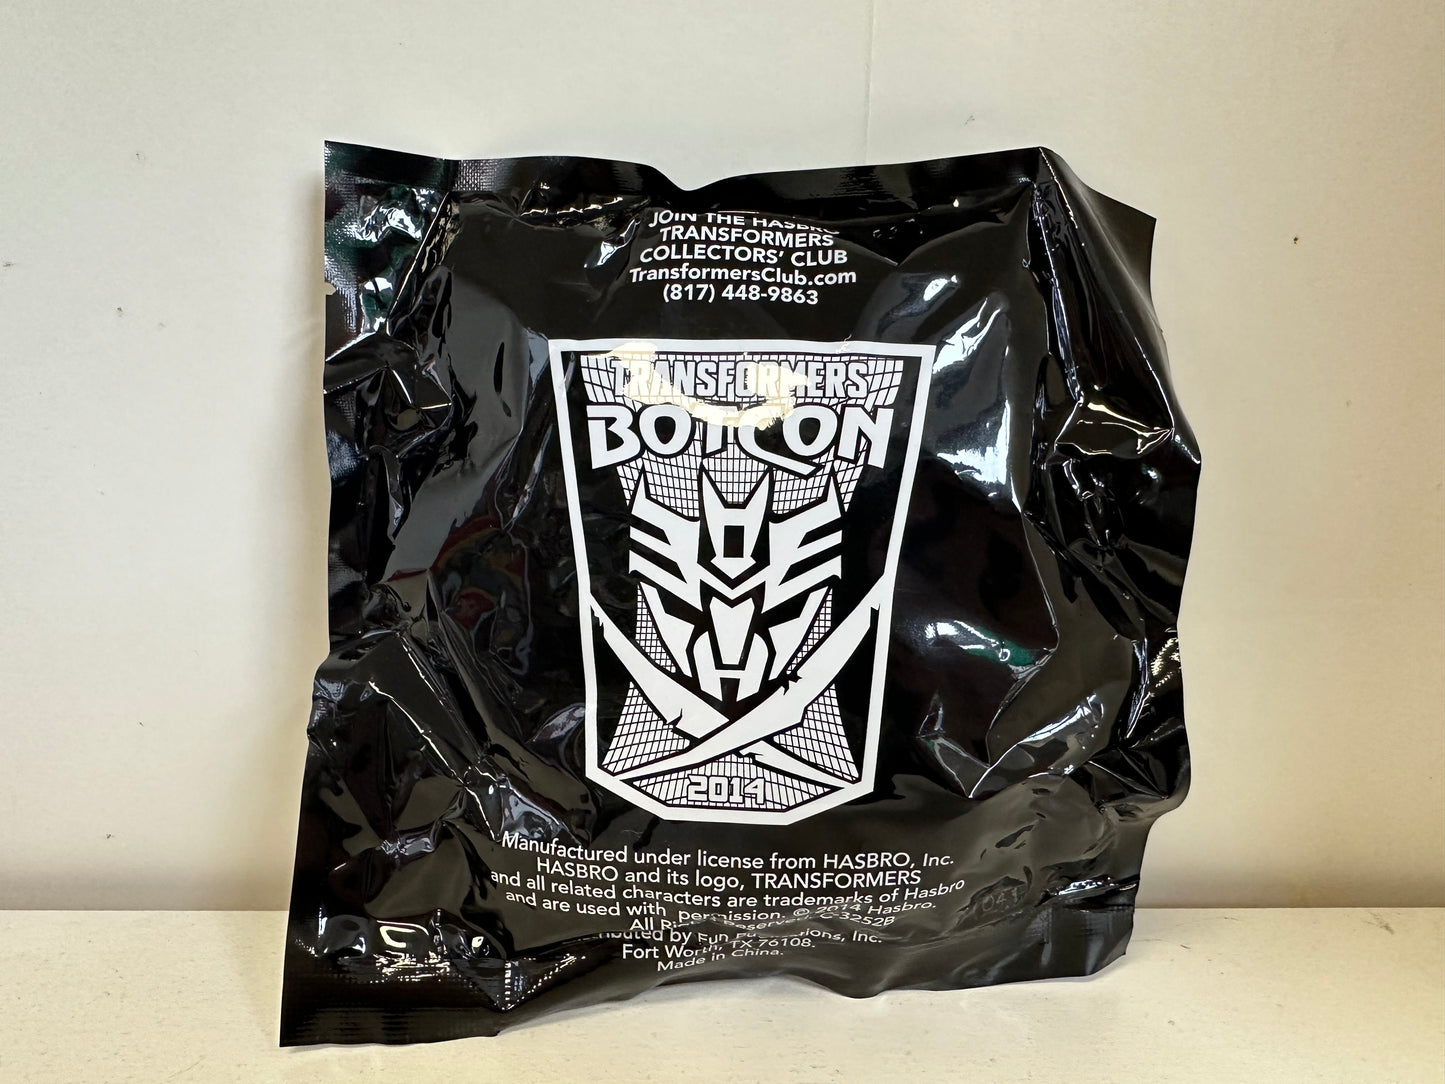 2014 Transformers Botcon Kre-o Souvenir Gift Set Factory Sealed